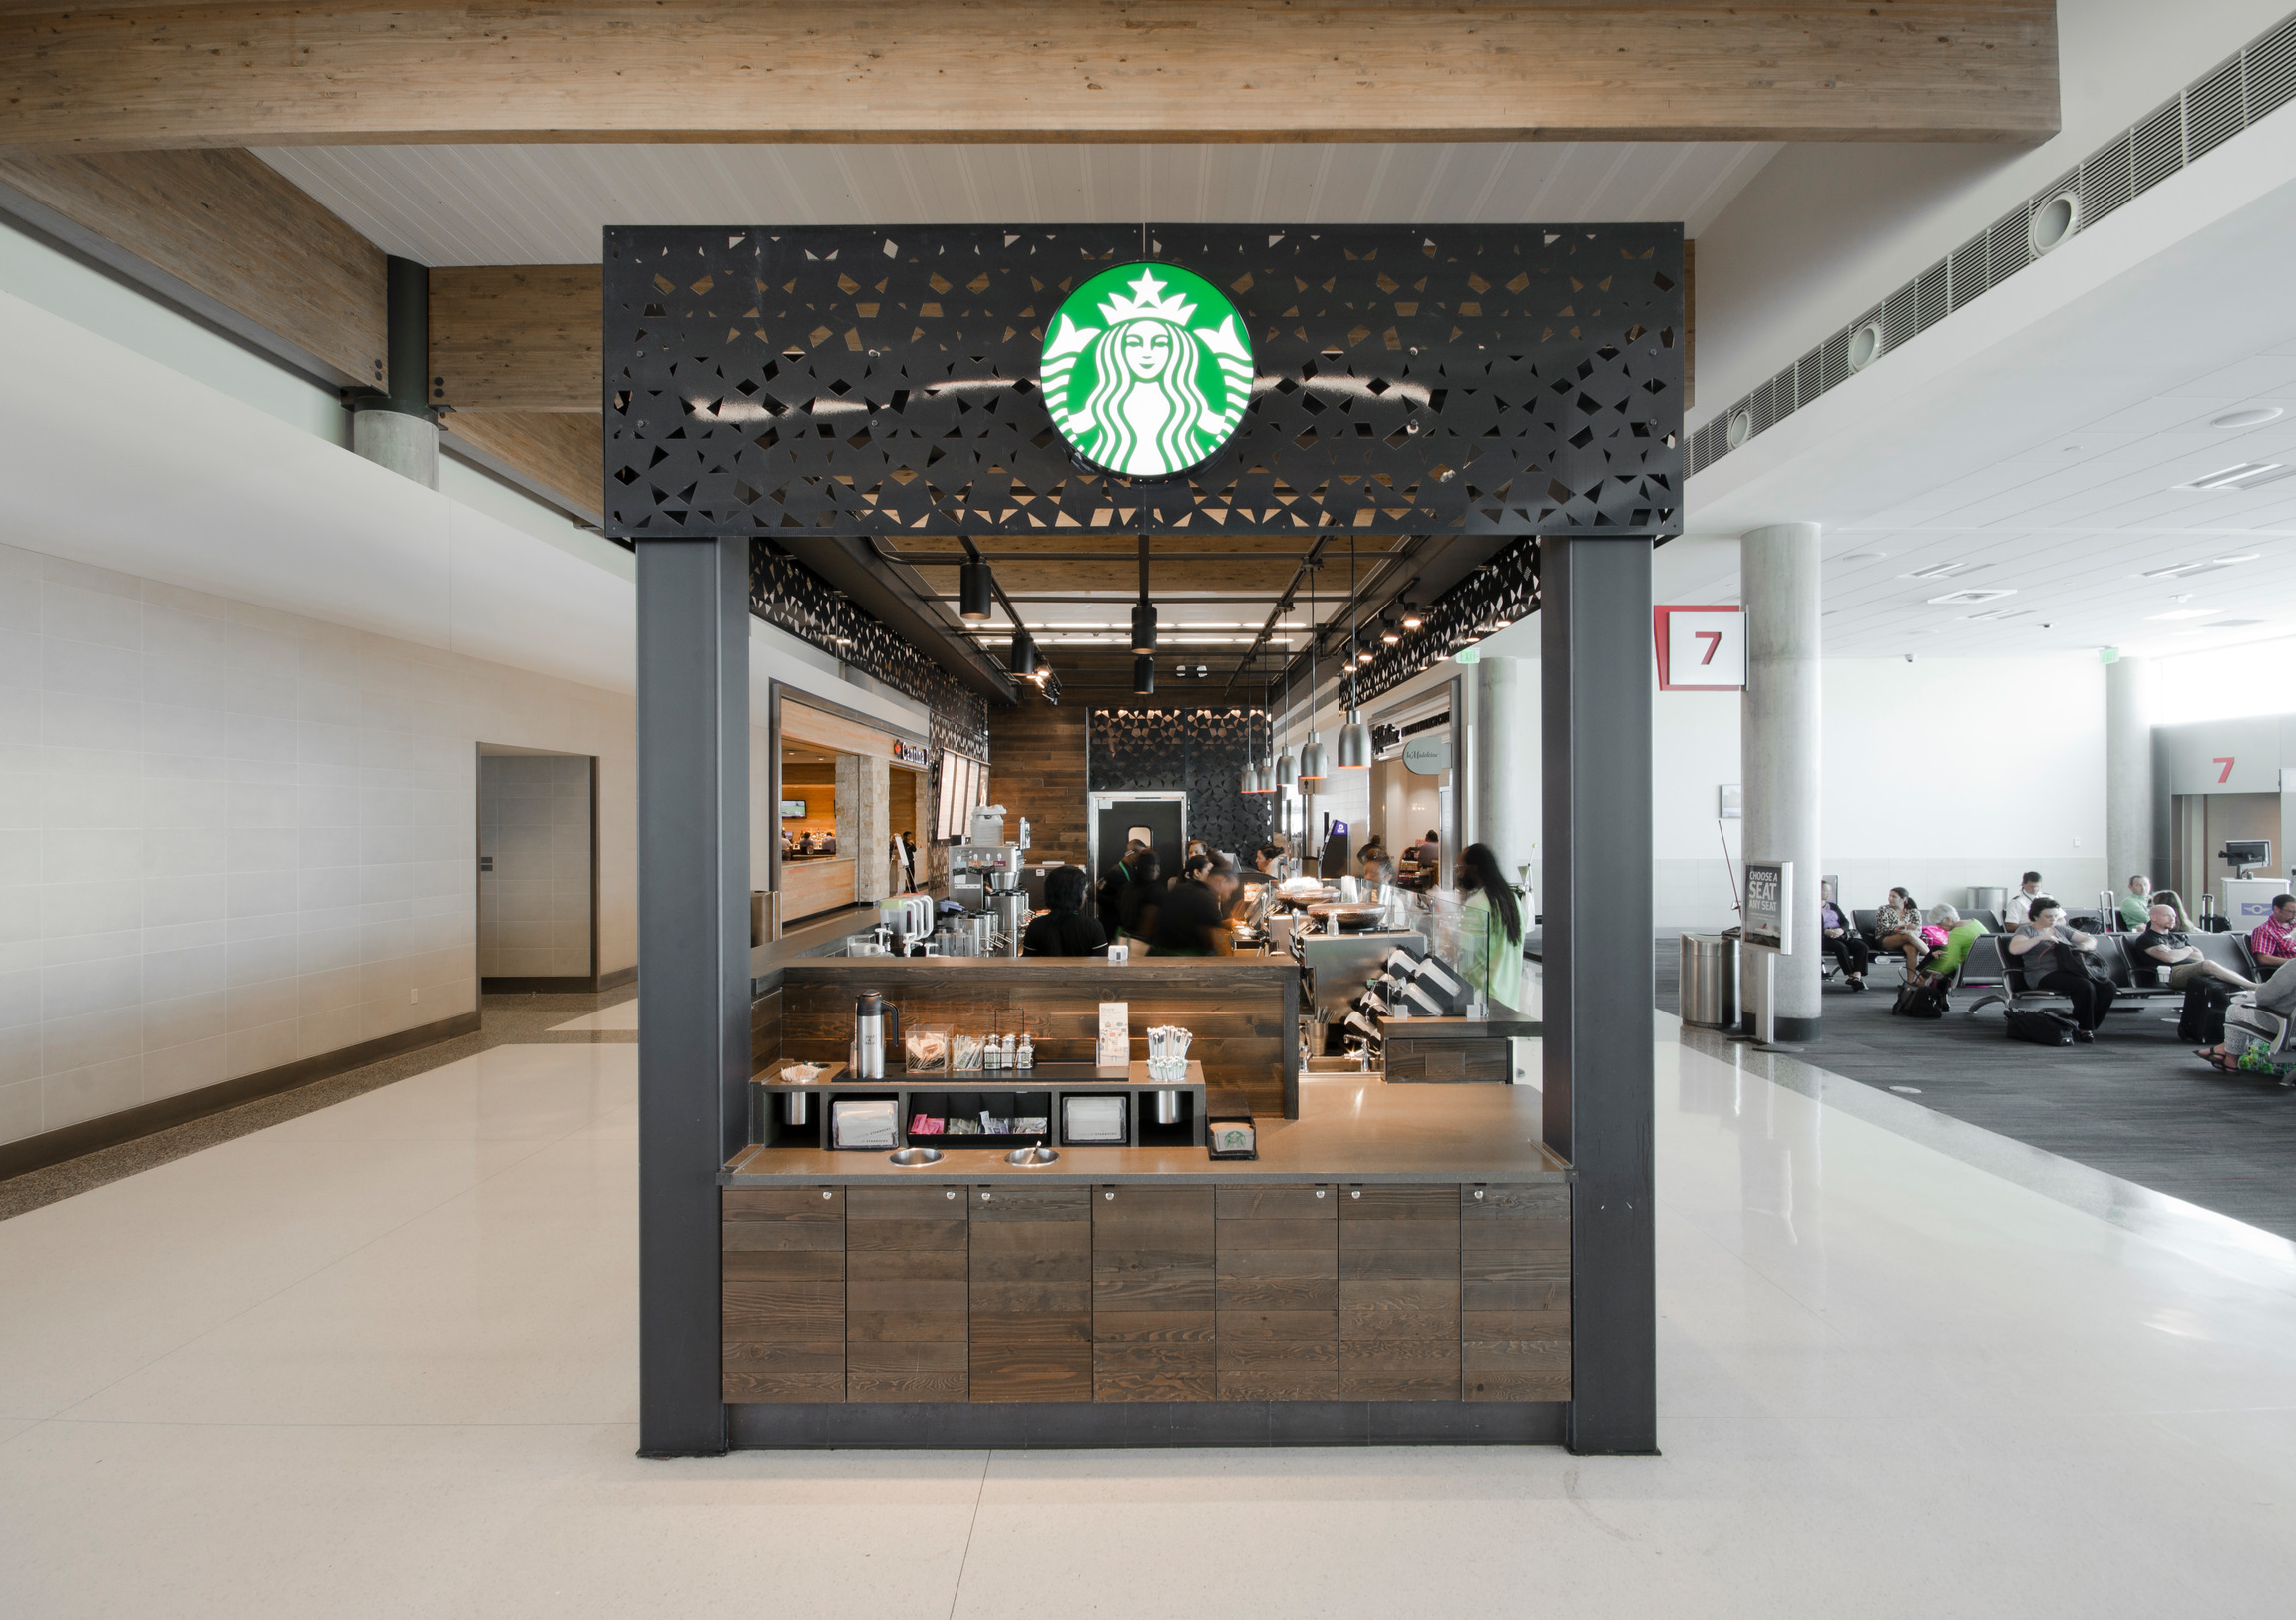 Photo of Starbucks, Dallas, TX